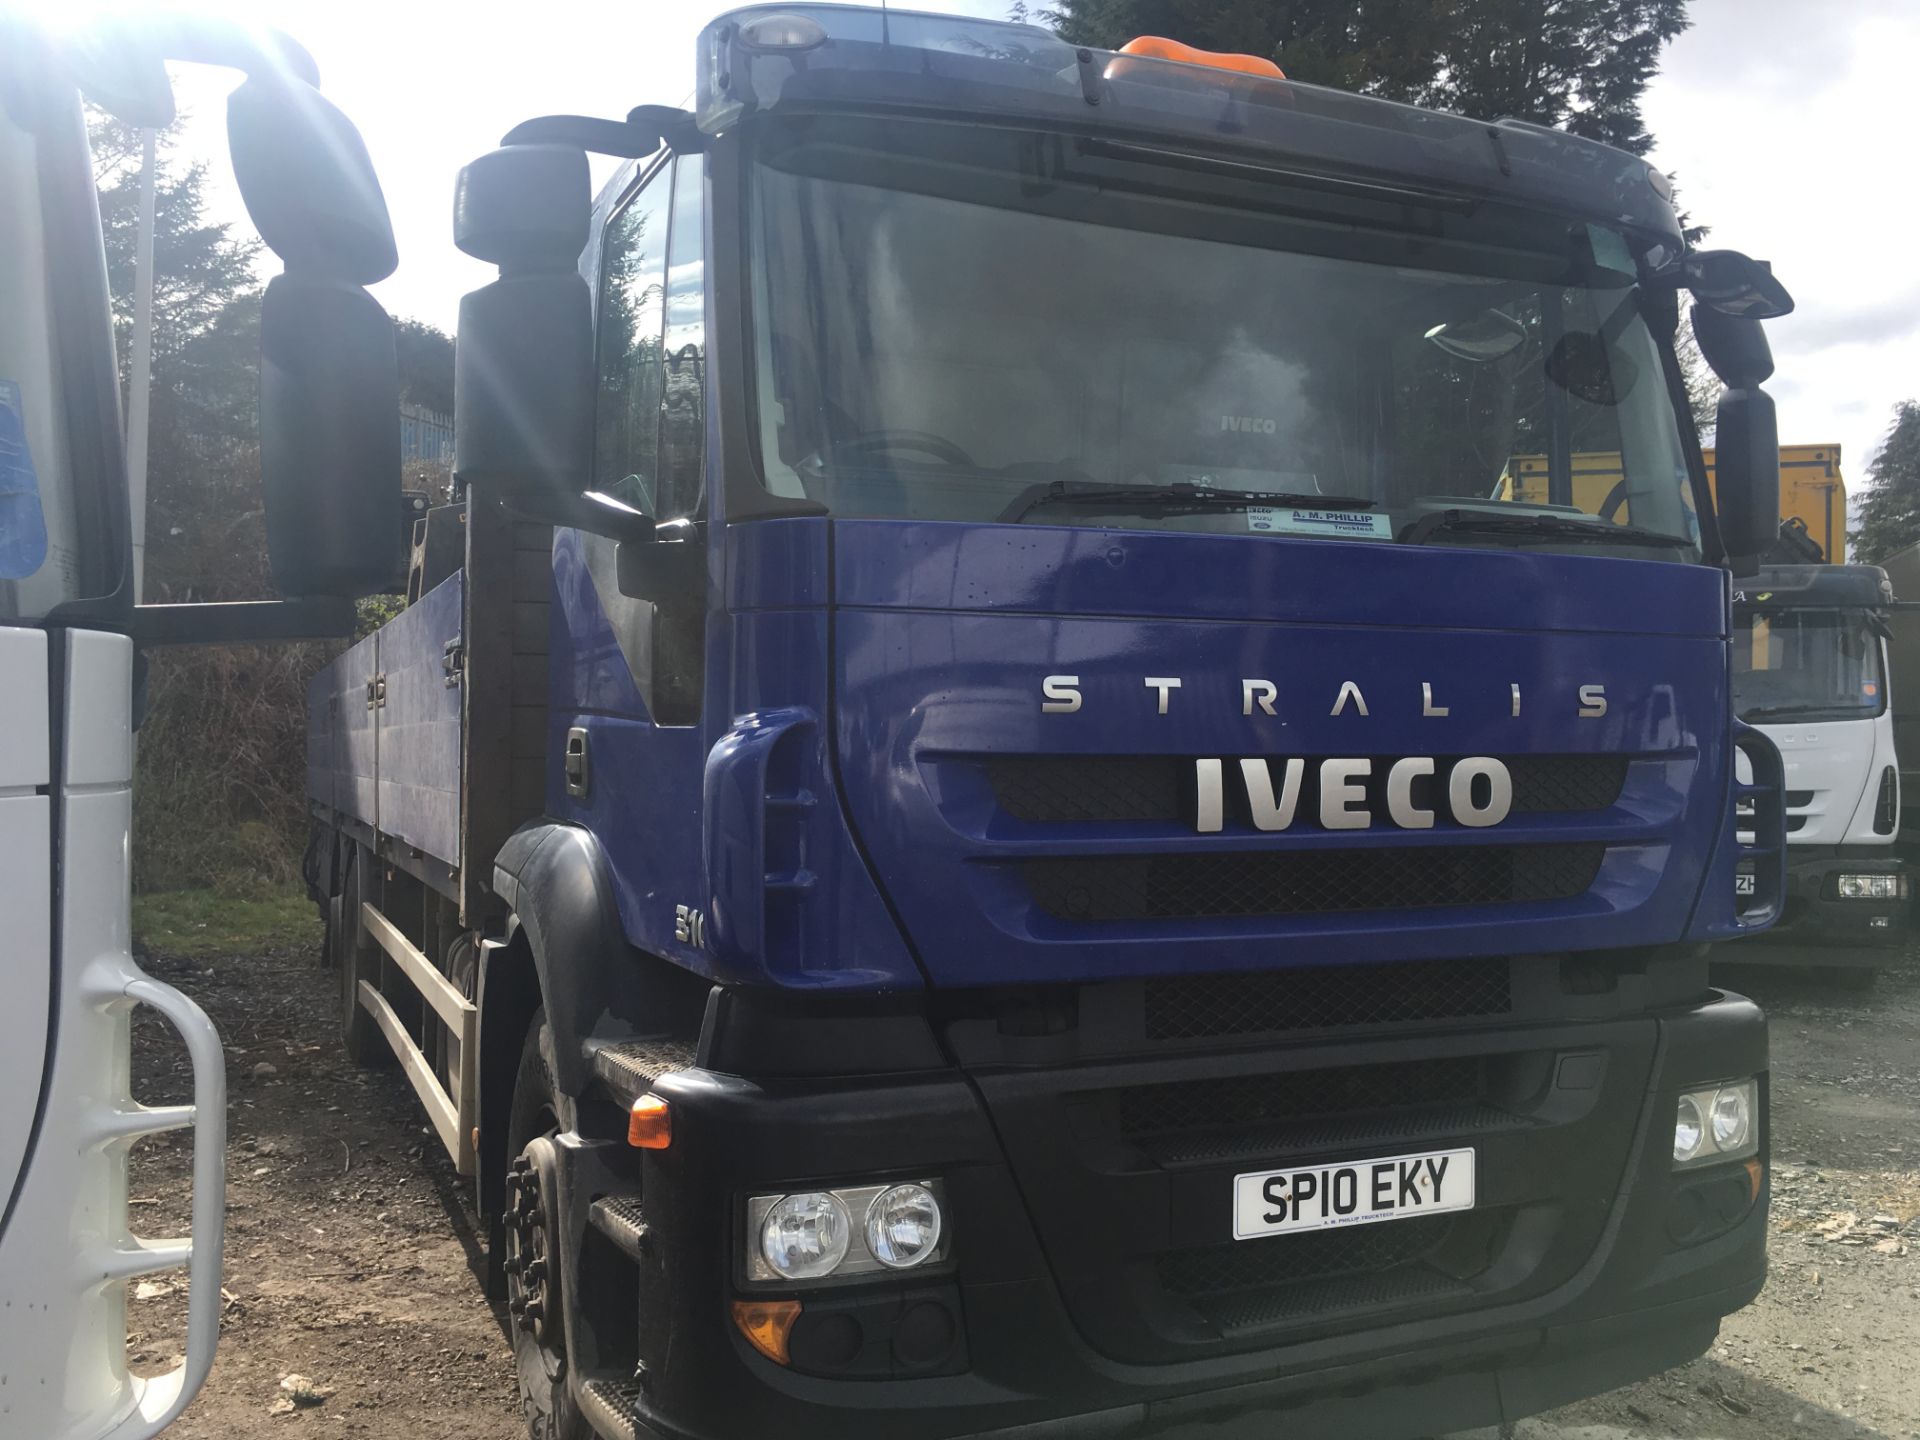 Iveco Stralis Ad260s31y/ps Day - 7790cc 2 Door Truck - Image 2 of 4